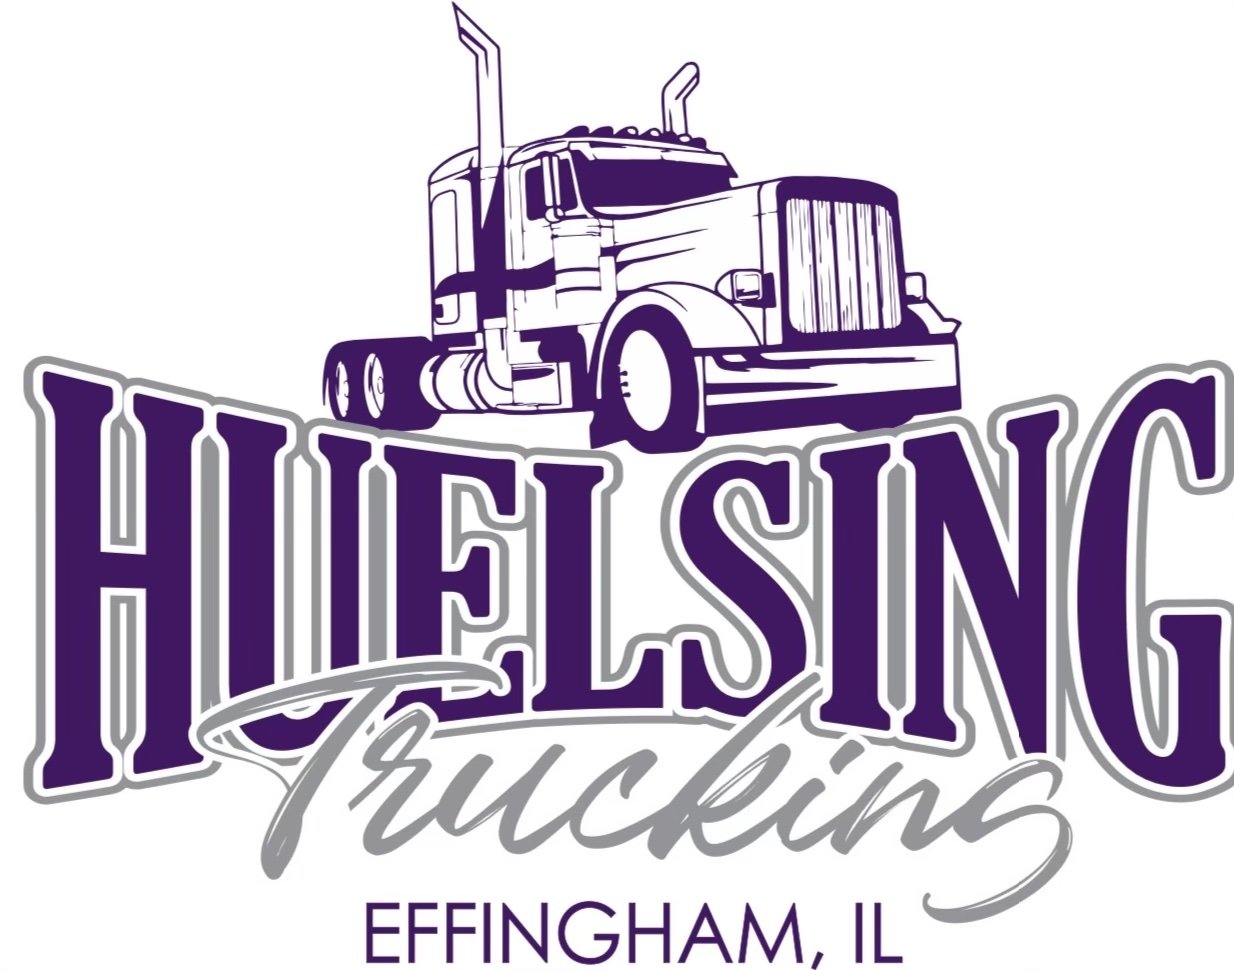 Huelsing Trucking